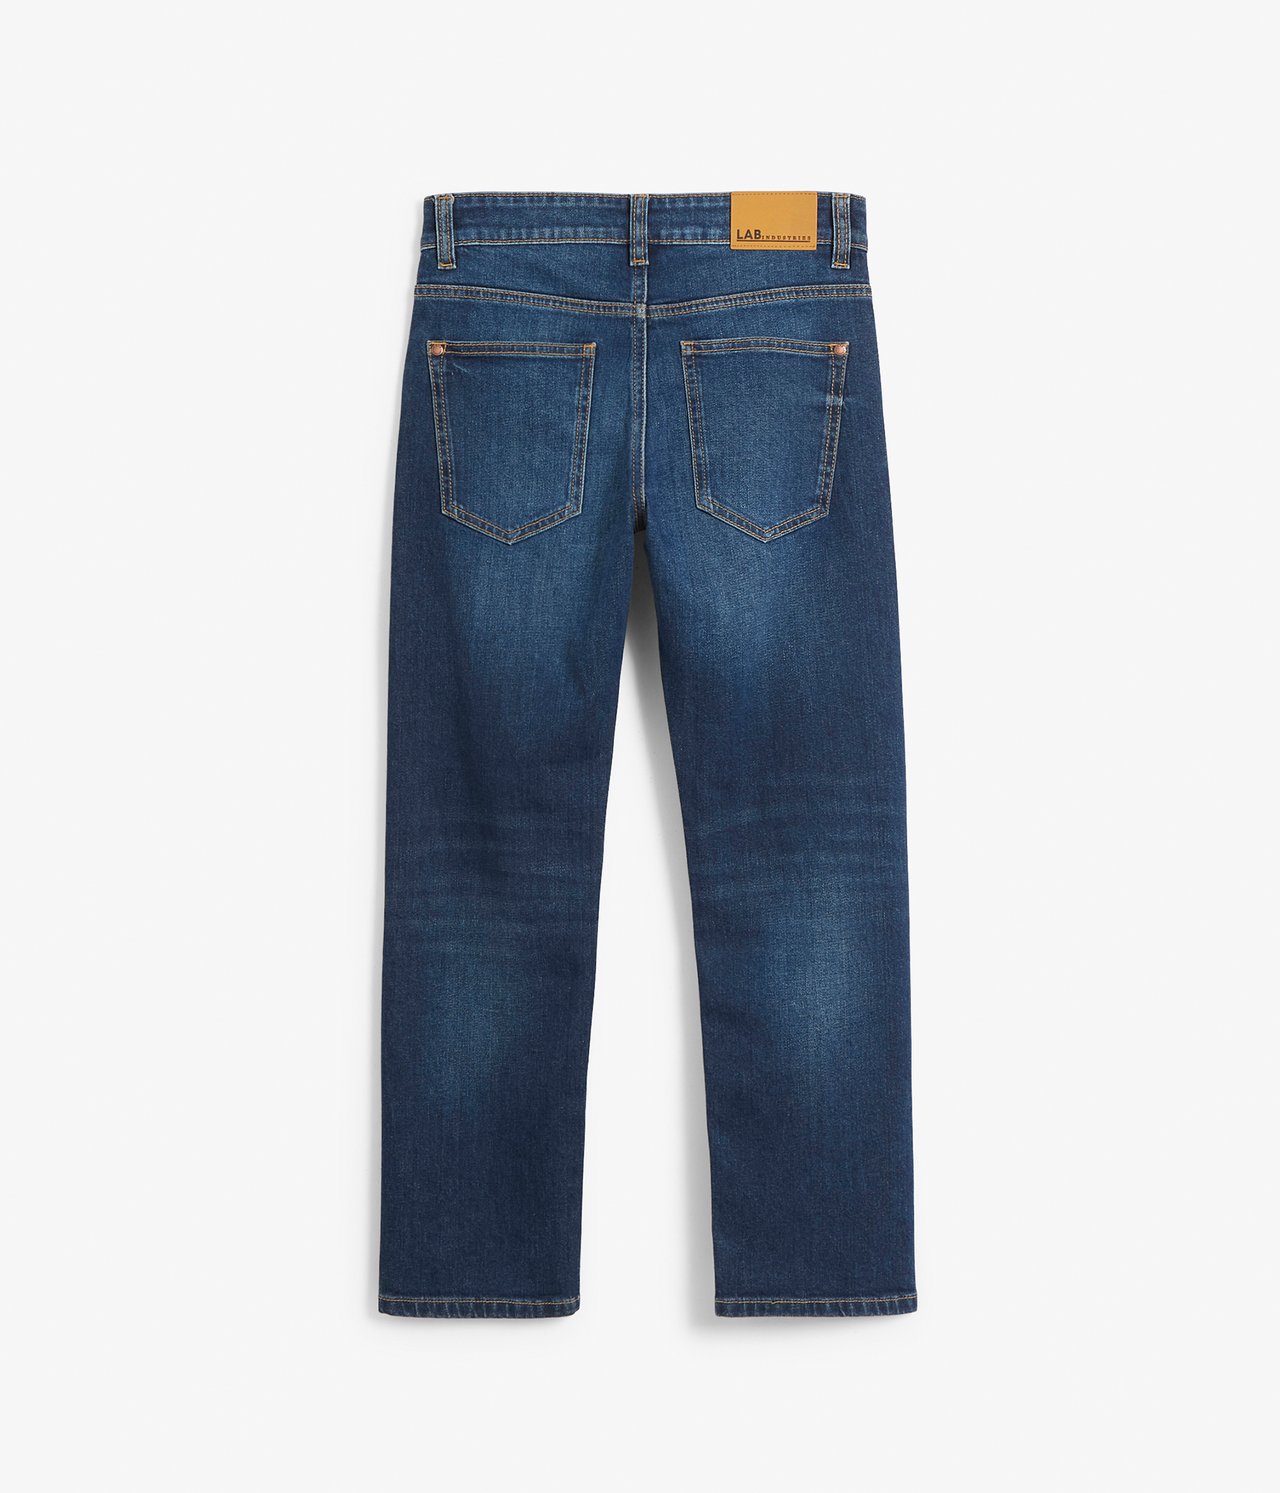 Retro jeans regular fit - Mörk denim - 3